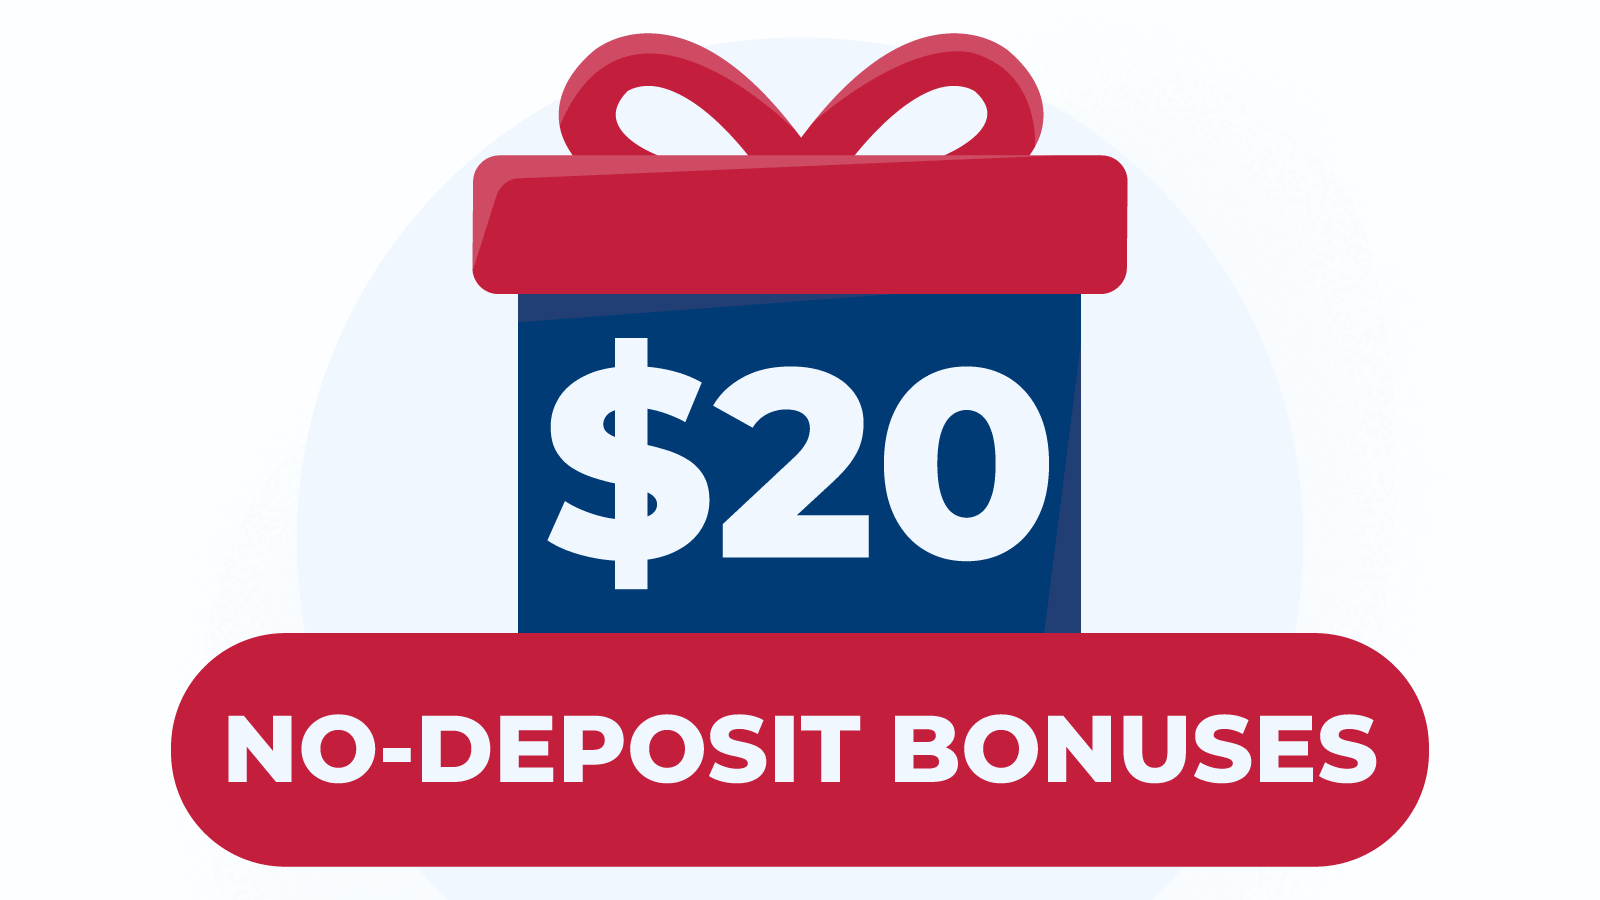 R$20 no-deposit bonuses